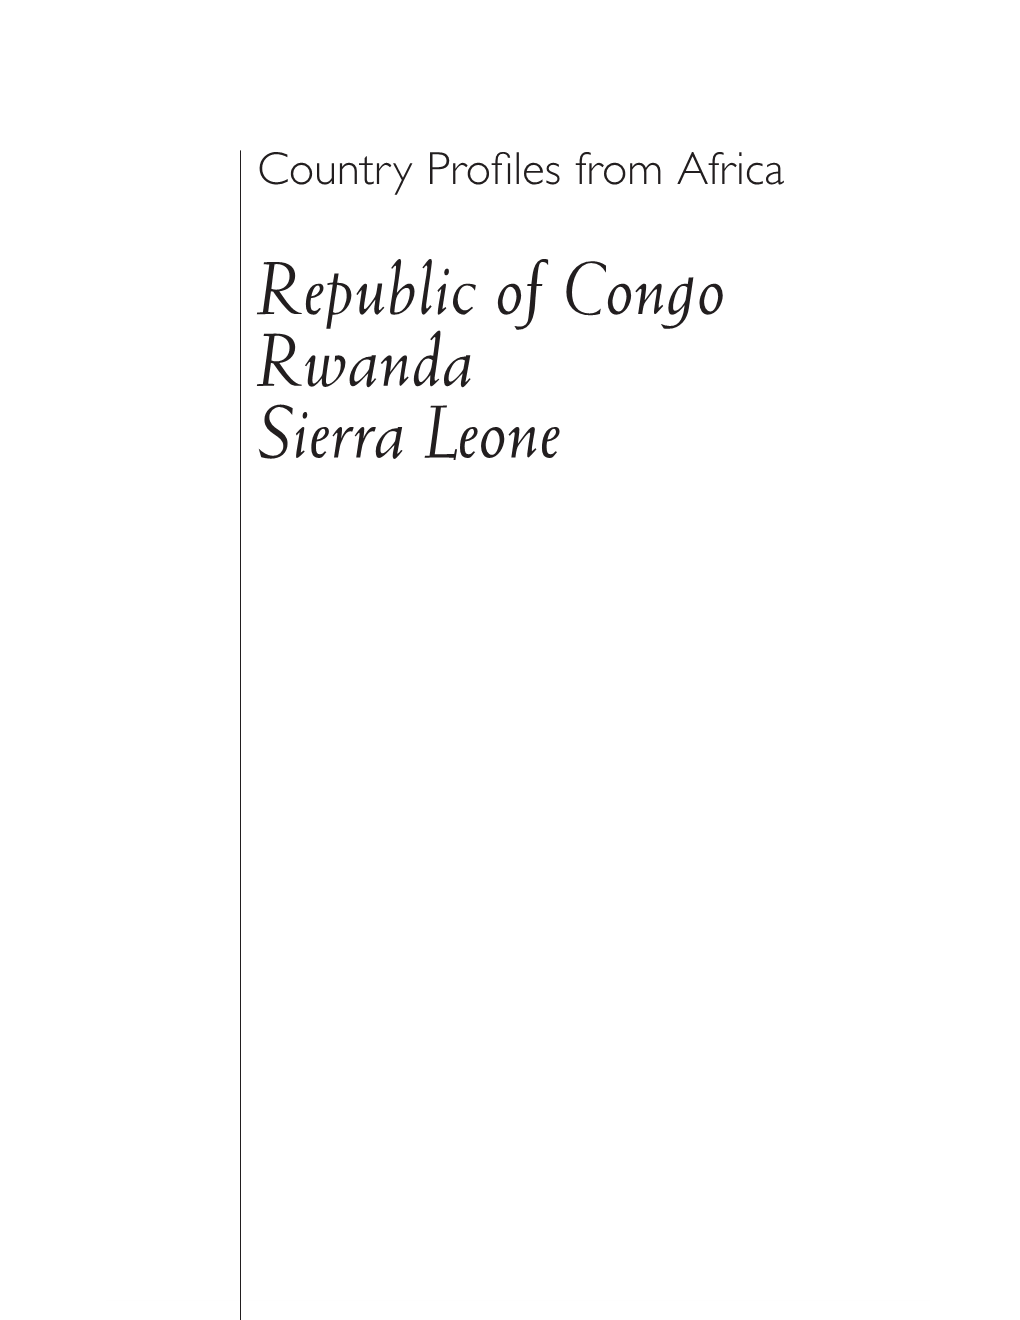 Republic of Congo Rwanda Sierra Leone